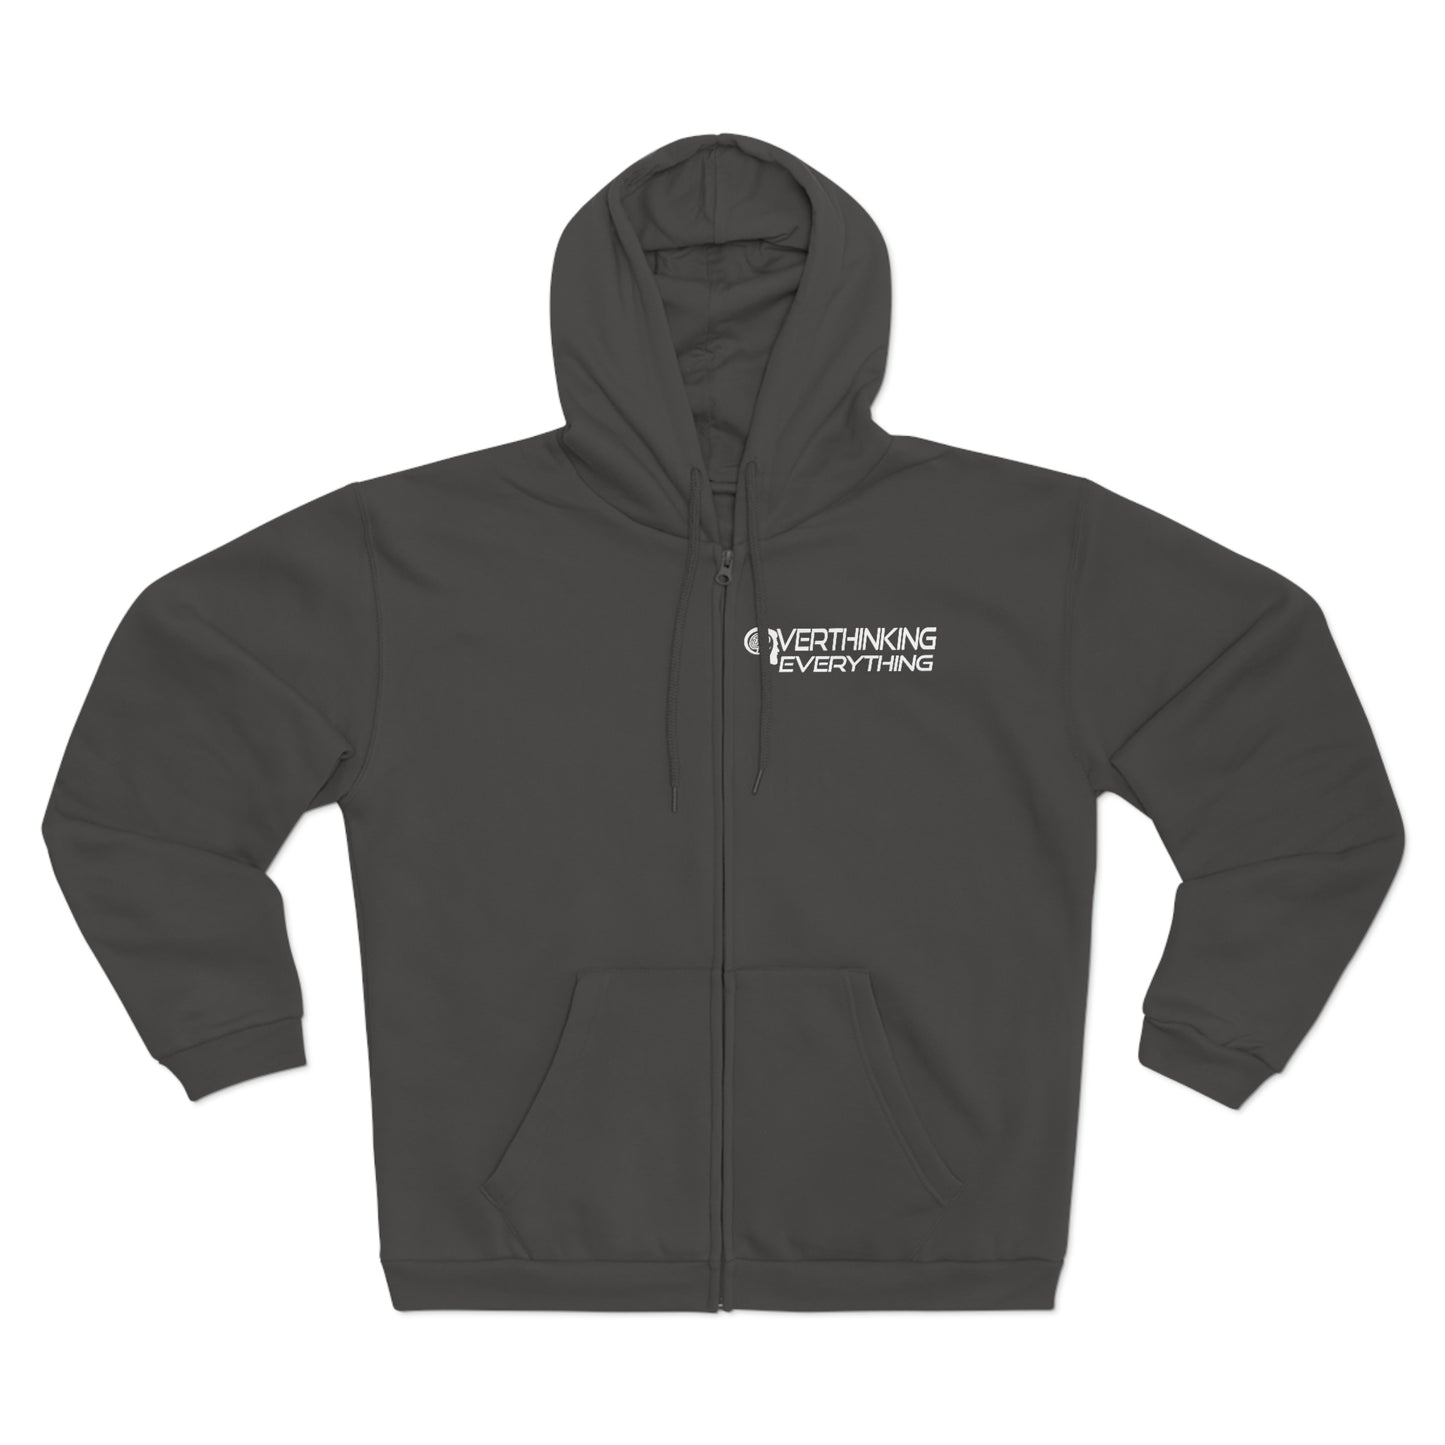 Overthinking Everything Unisex Hooded Zip Sweatshirt